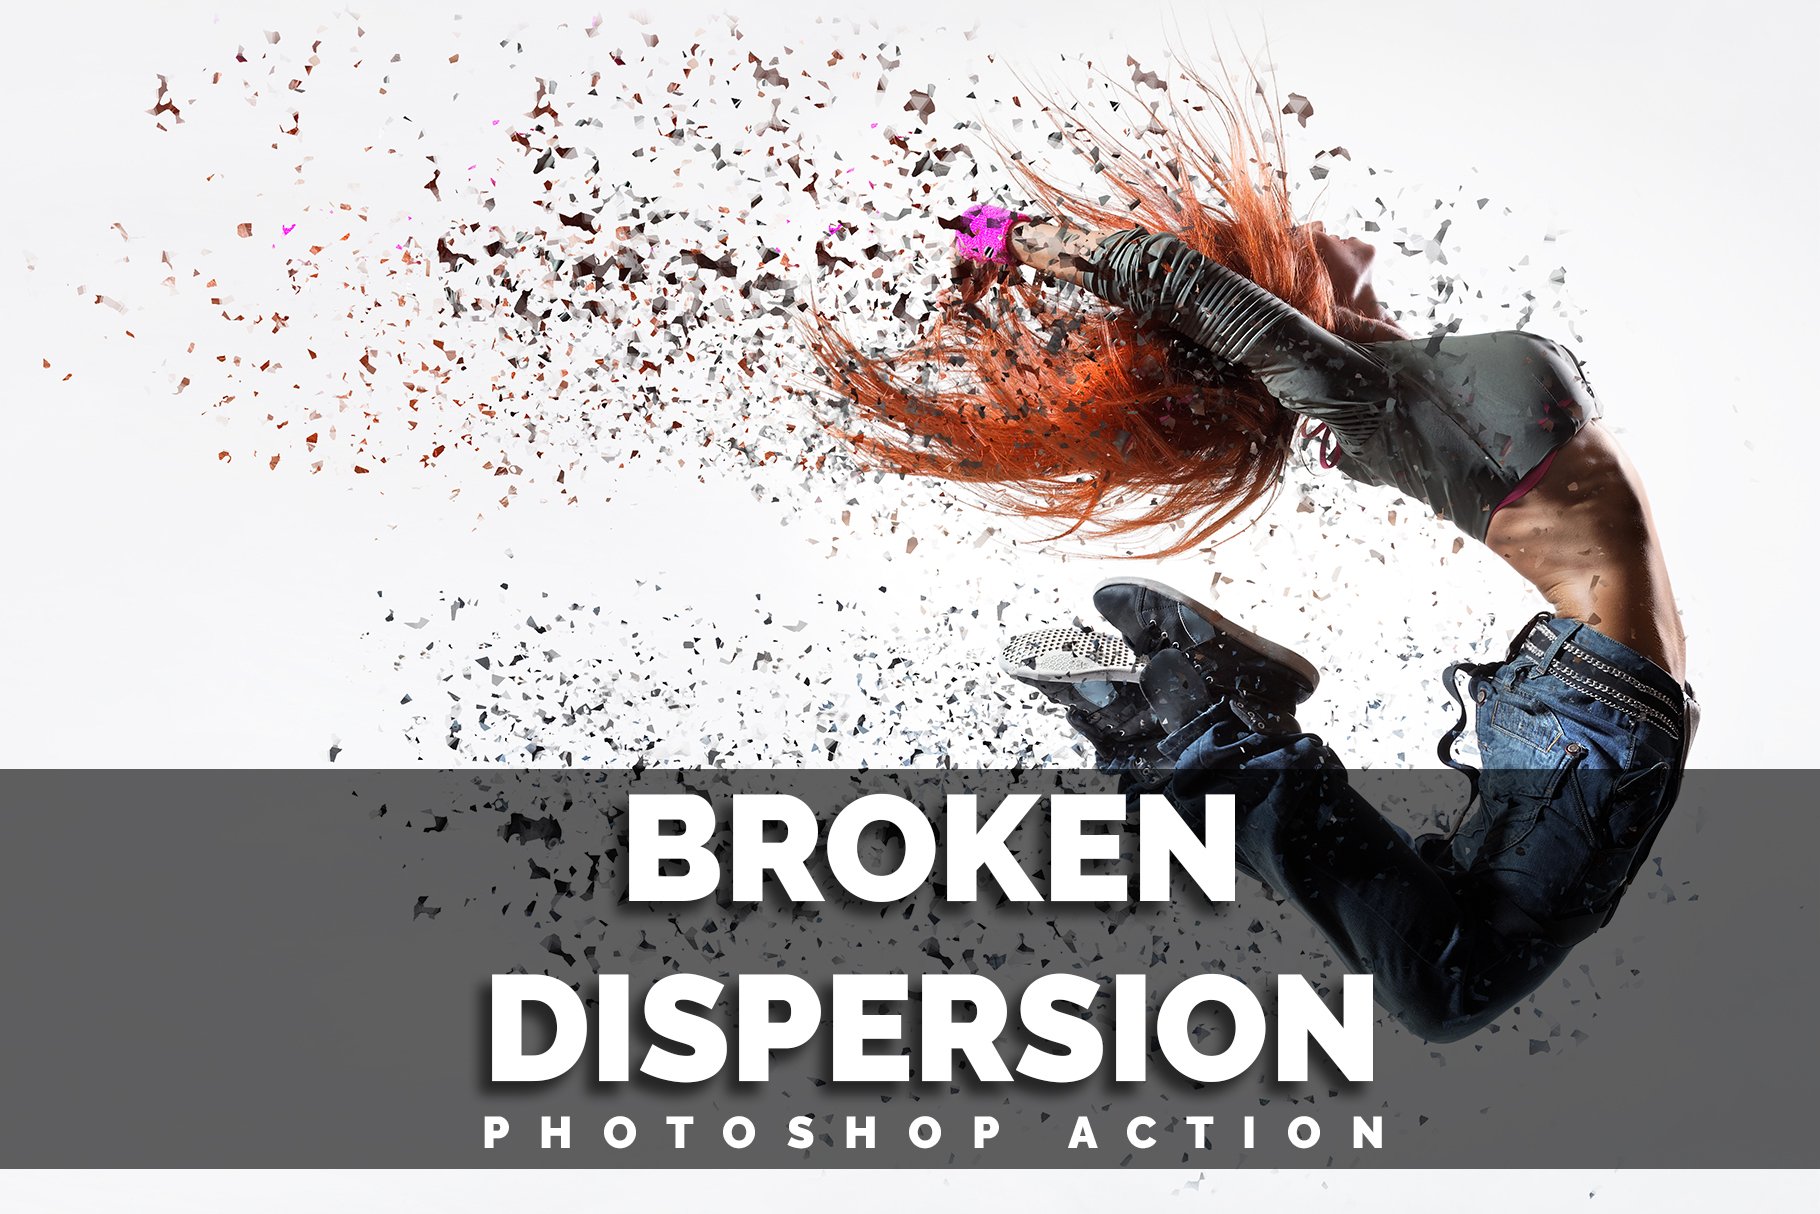 Broken Dispersion Photoshop Actioncover image.